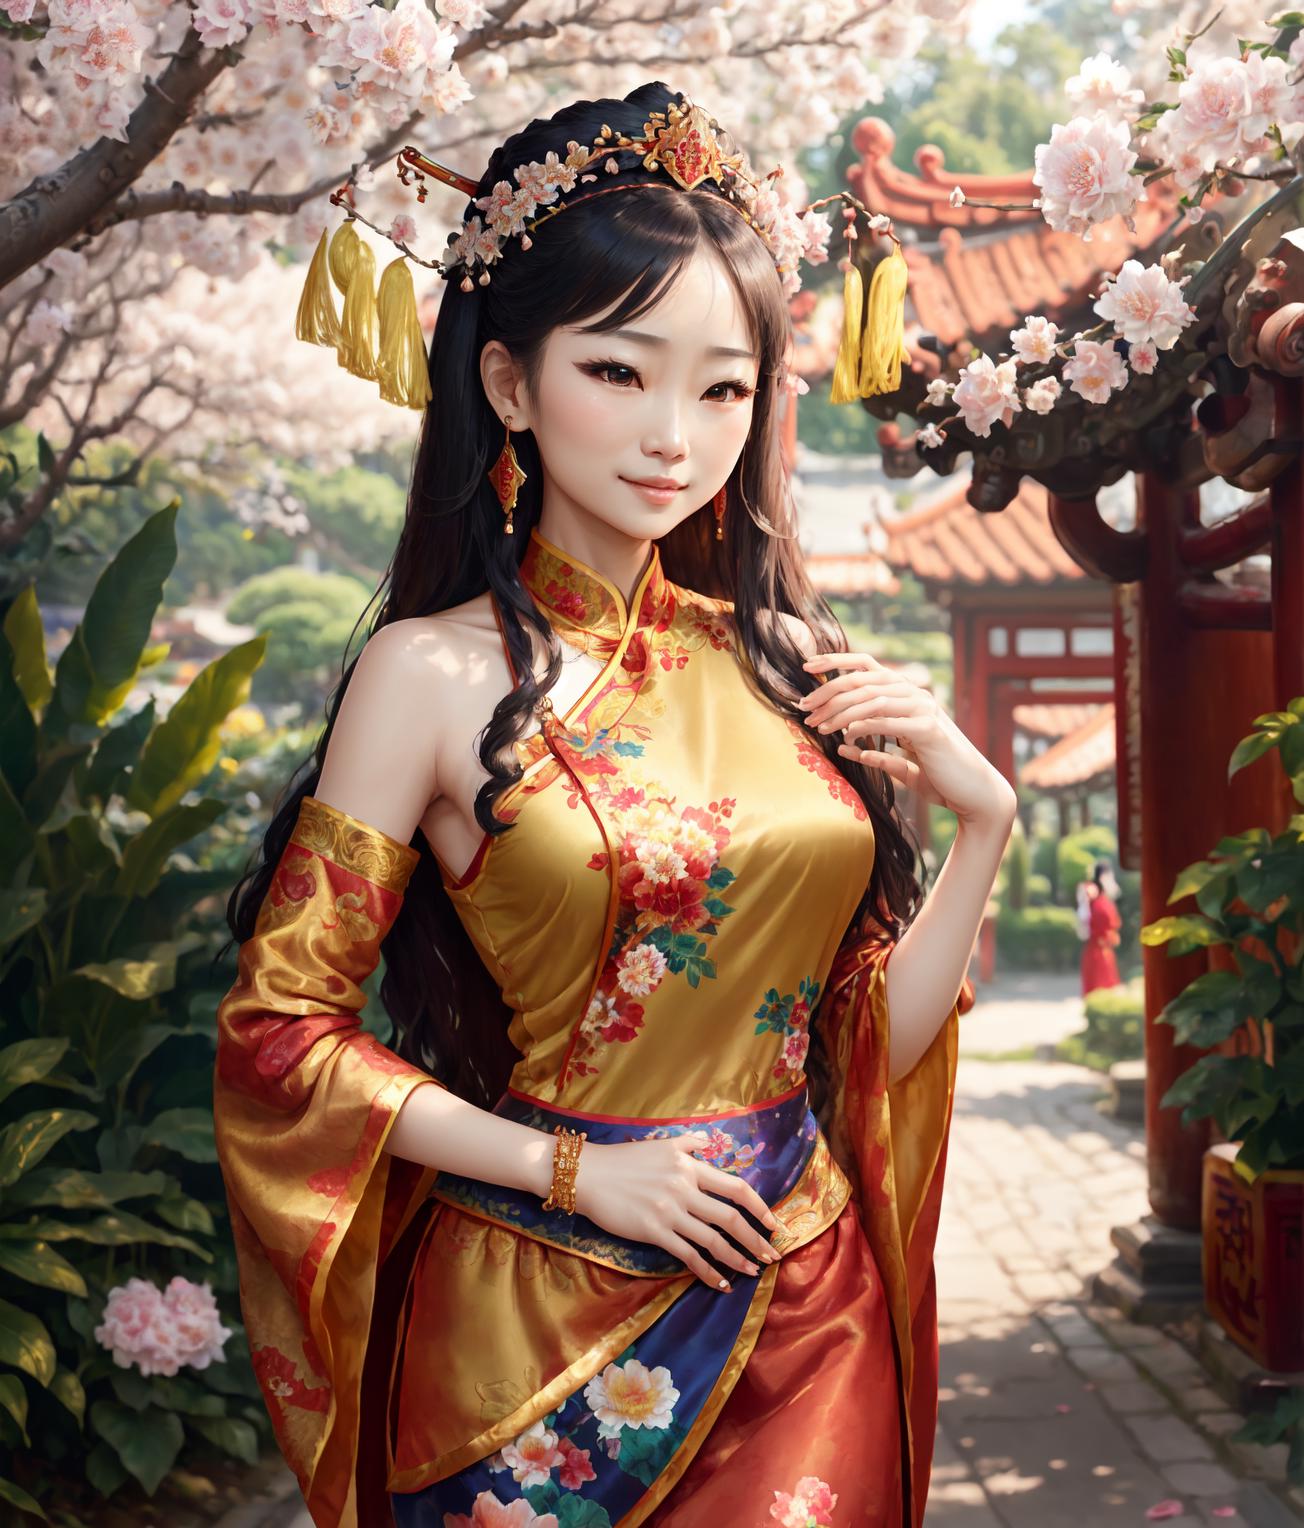 Zhuang Dresses - 壮族礼服 image by Nitram